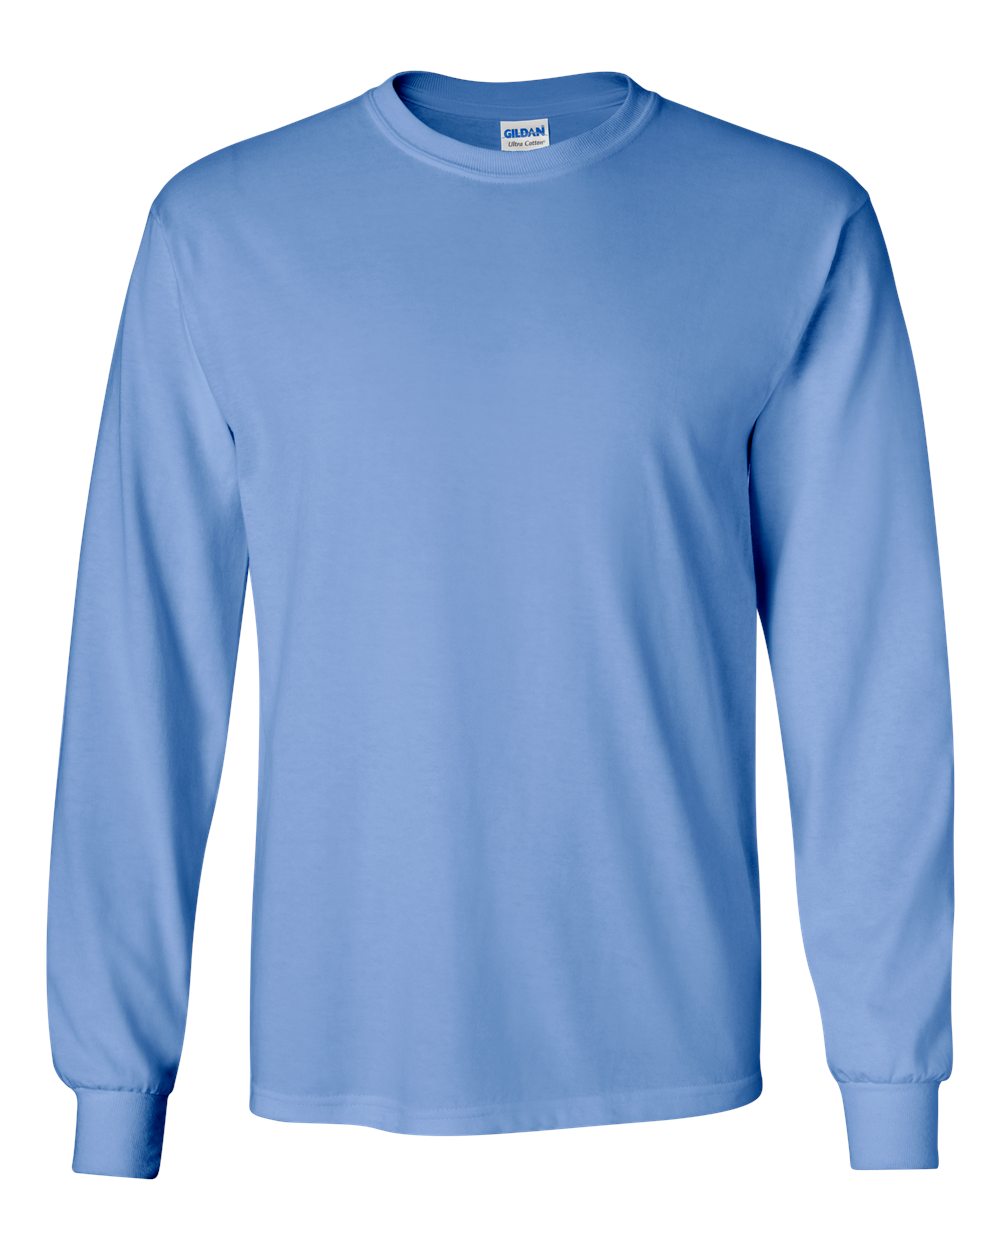 Gildan Plain Cotton T-Shirt Short Sleeve Solid Blank Design Tee Men Tshirt S-5XL 